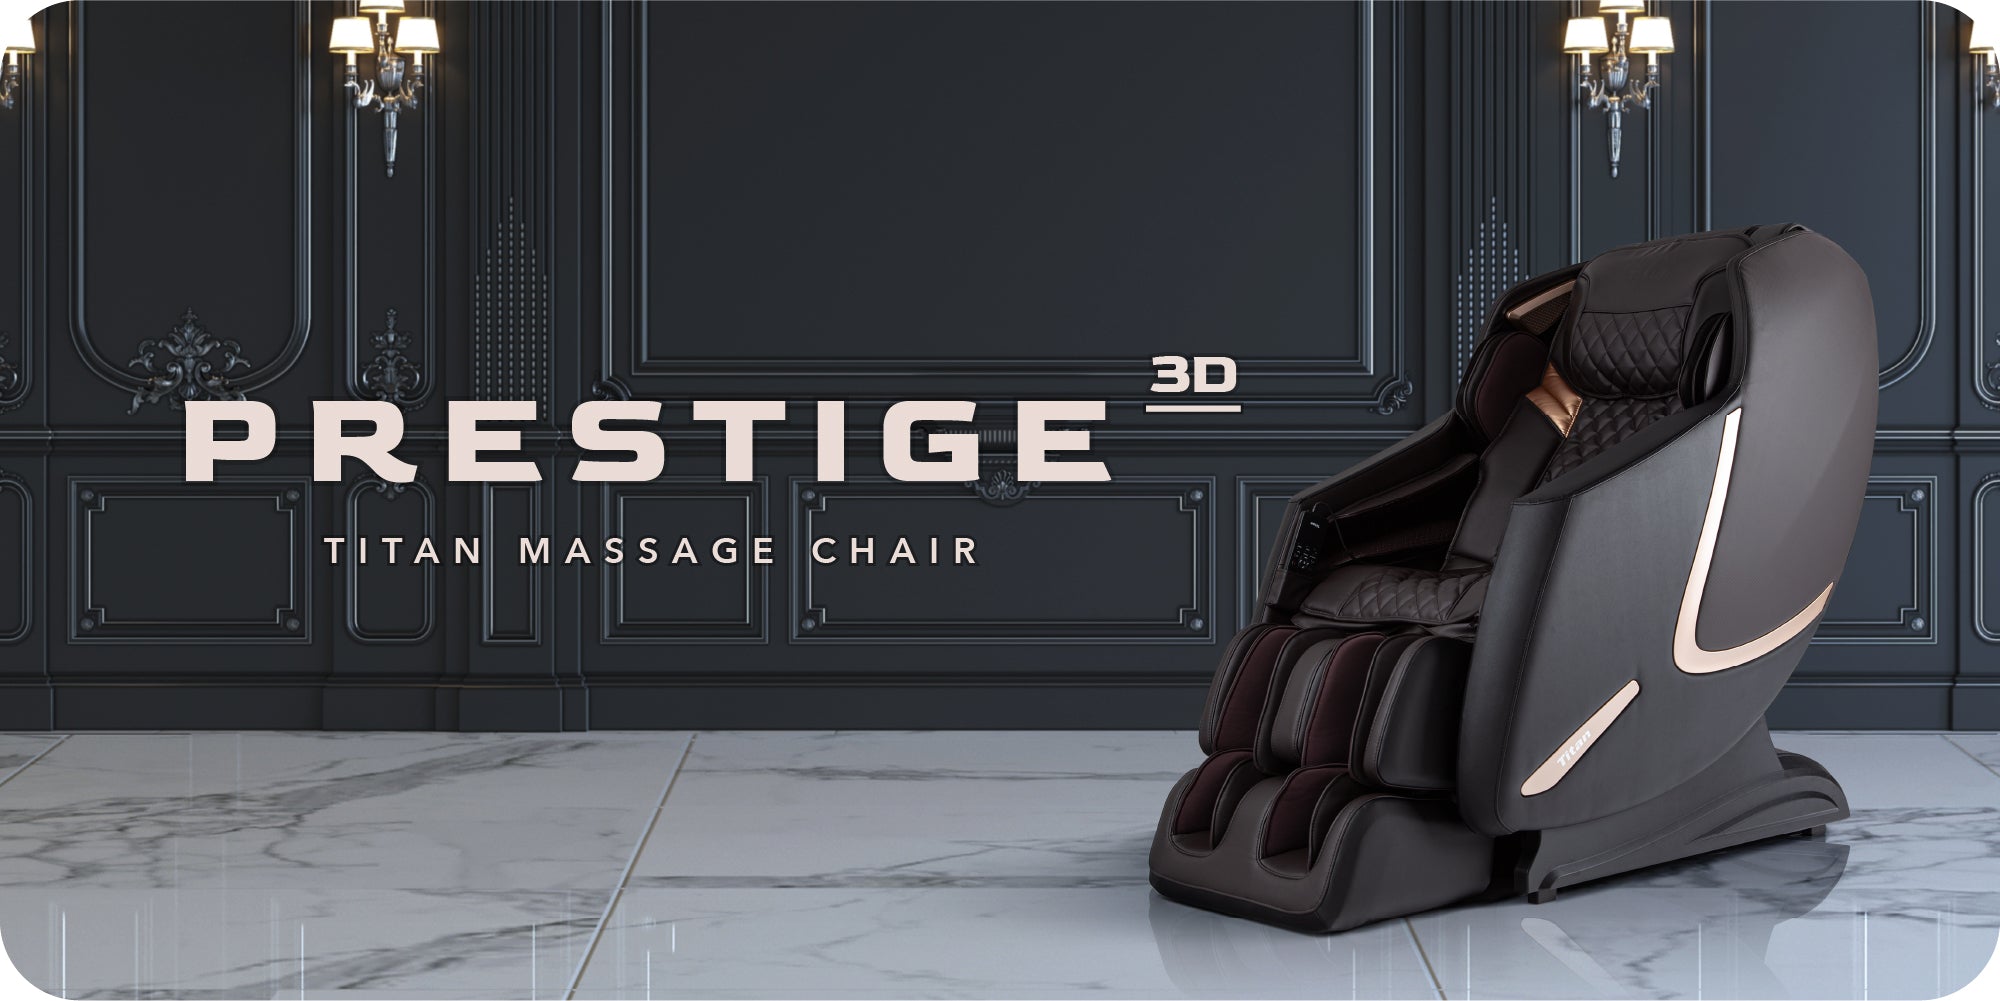 The Titan 3D Prestige banner